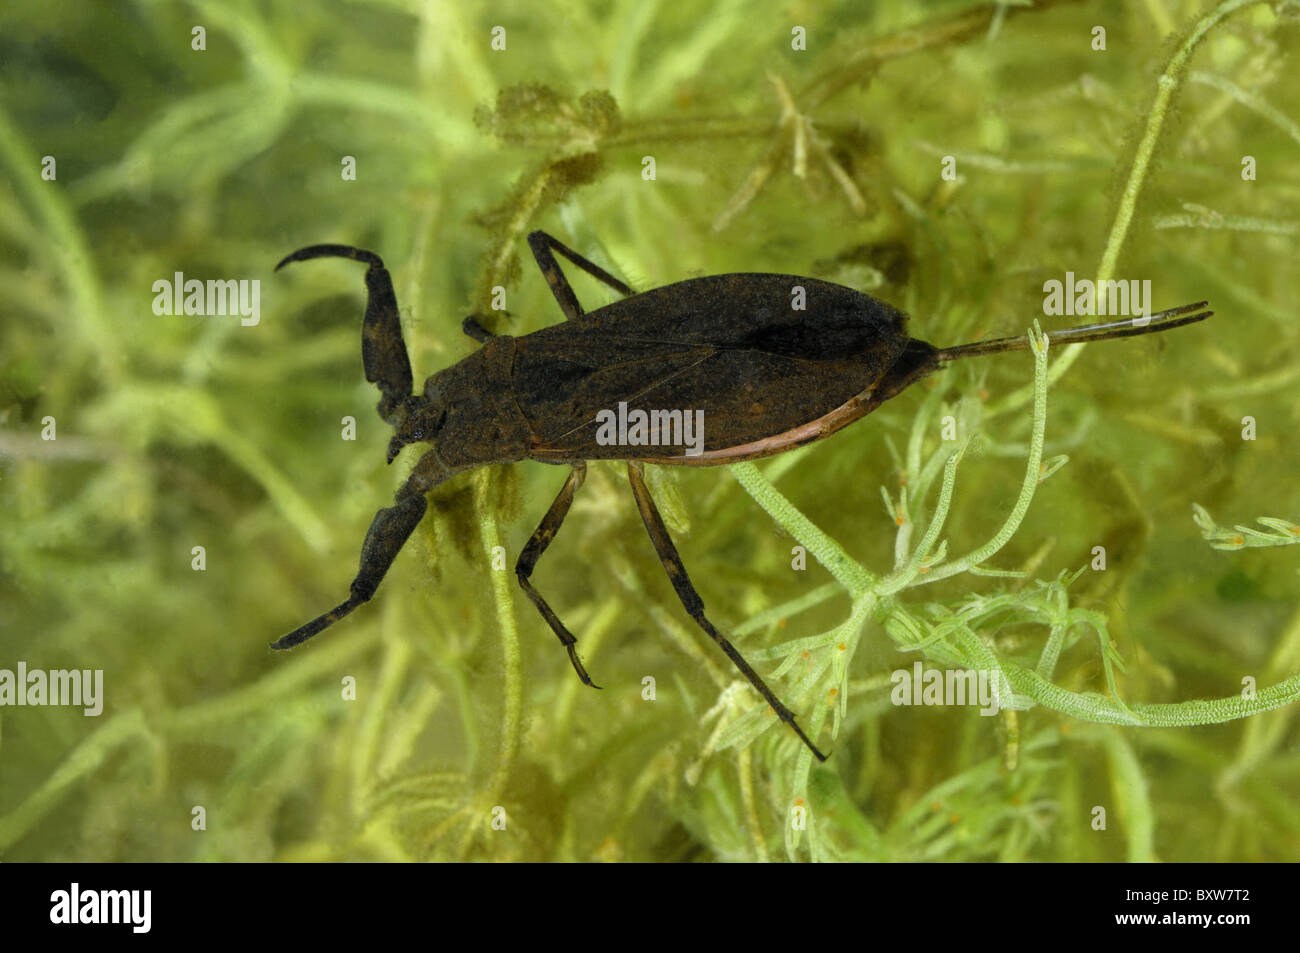 Water scorpion (Nepa cinerea) swimming in a pond - Belgium Stock Photo